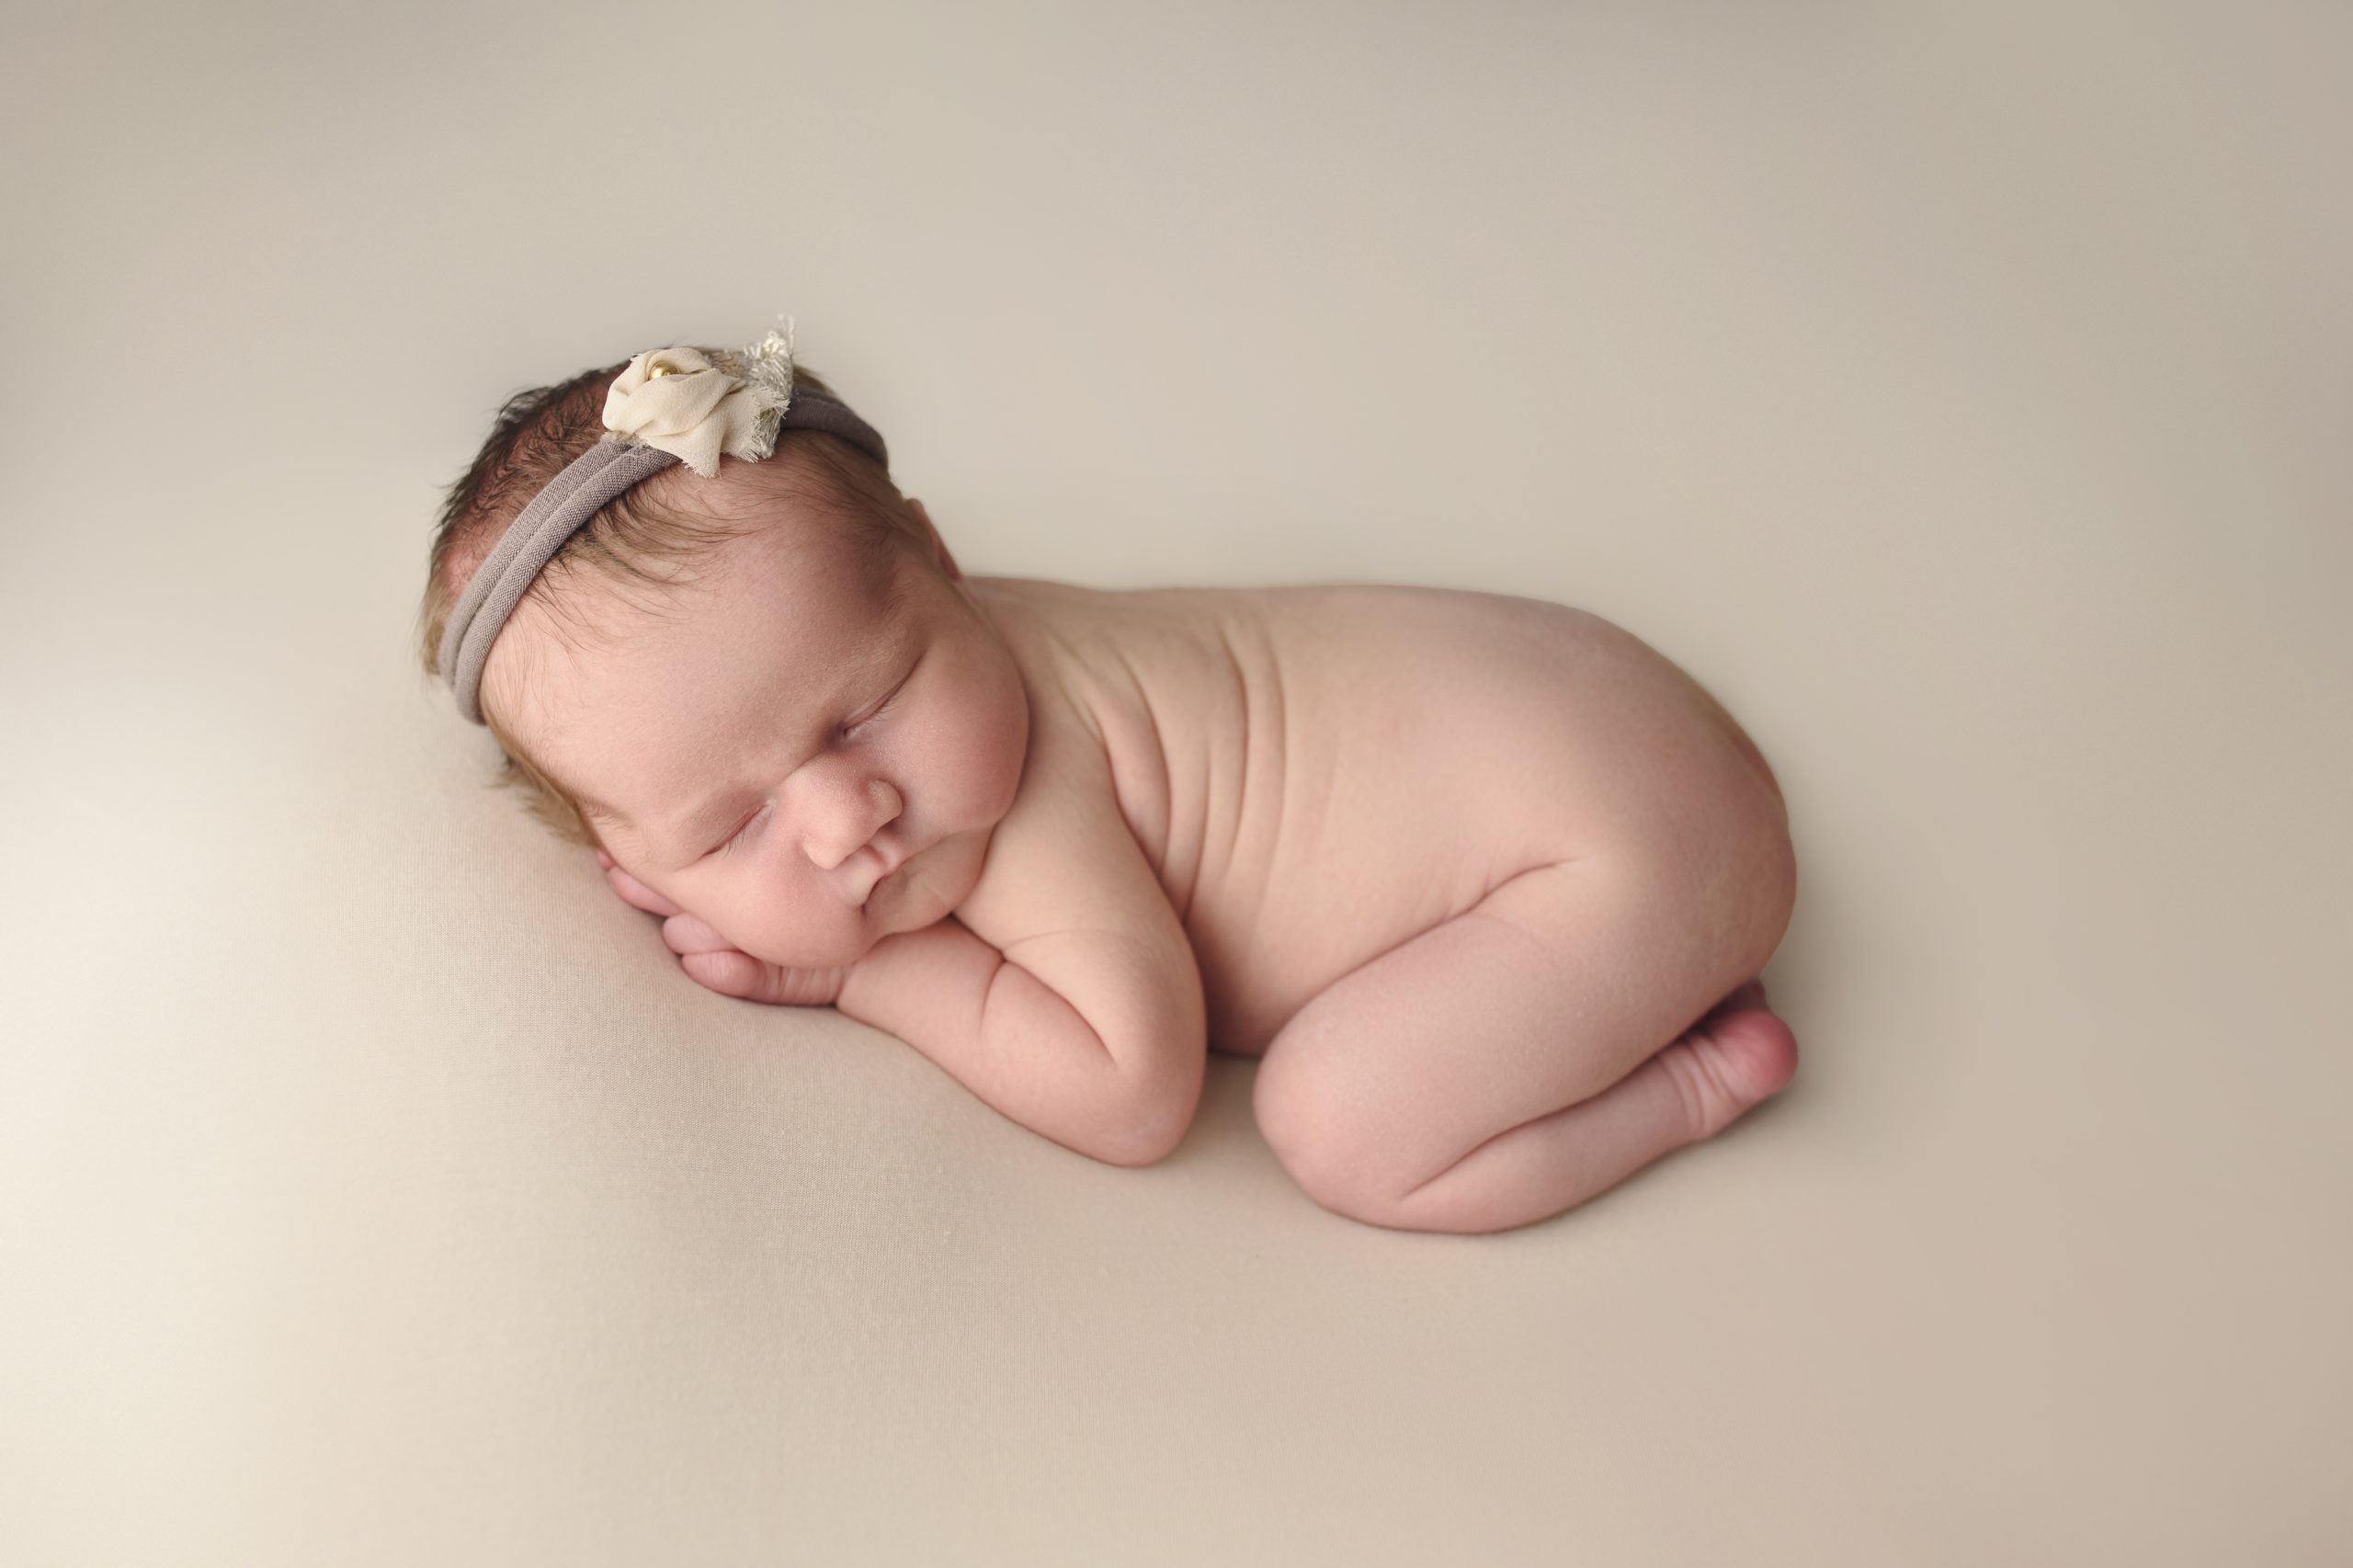 grand rapids mi newborn photography studio shoot baby sleeping on cream background